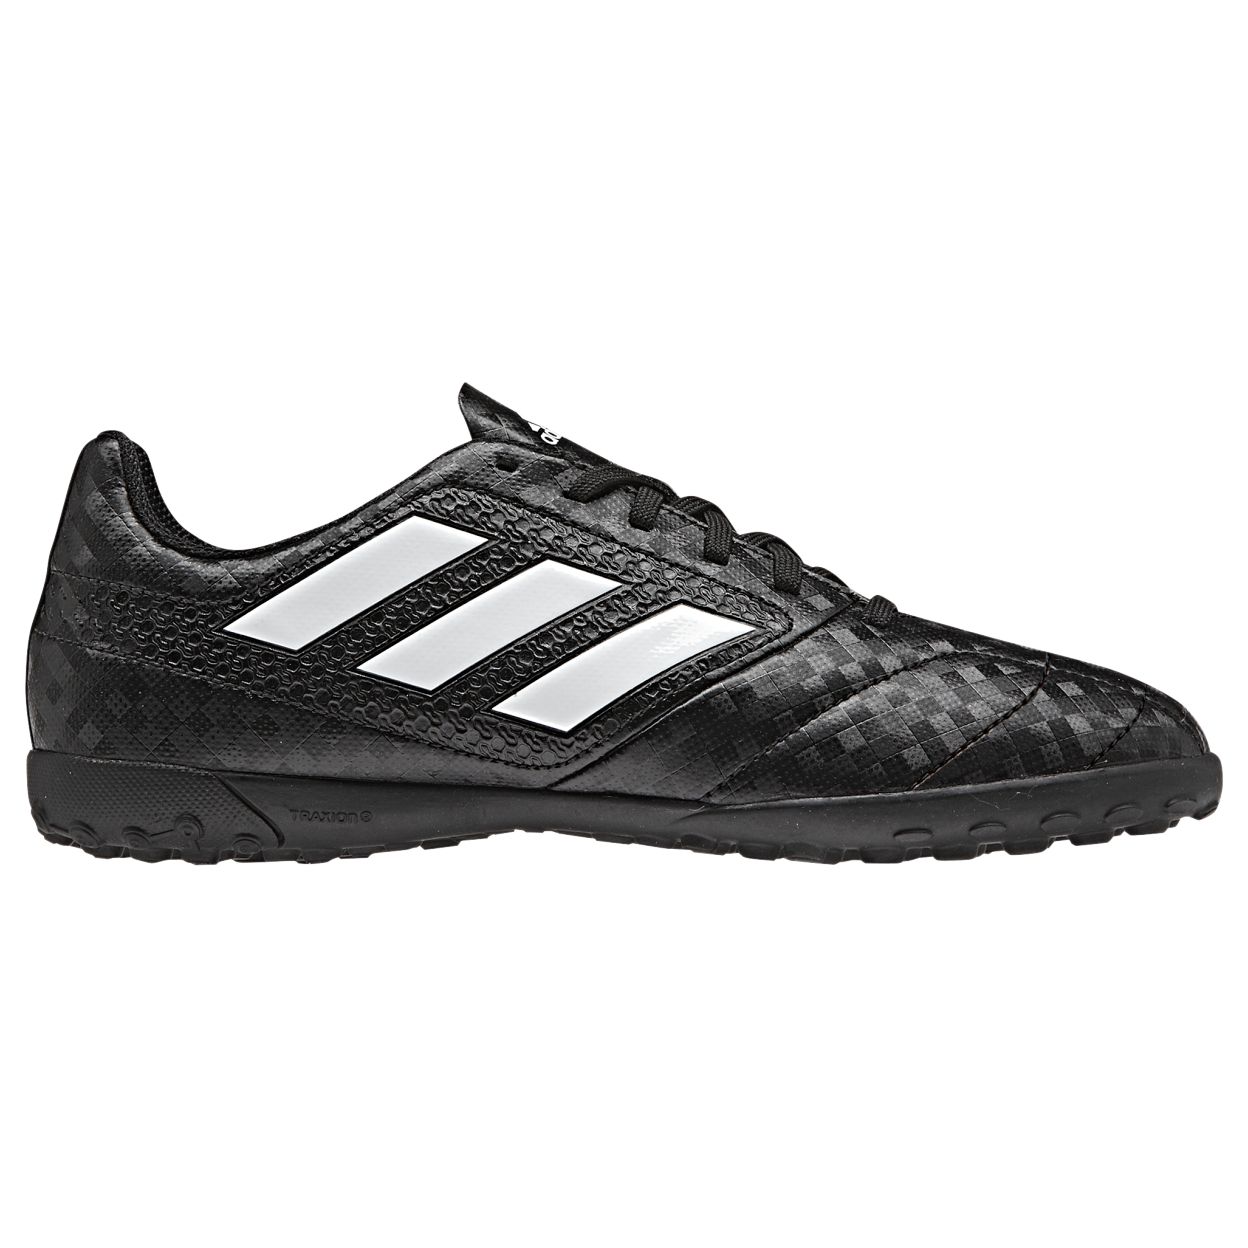 adidas Children's Ace 17.4 TF Football Boots, Black